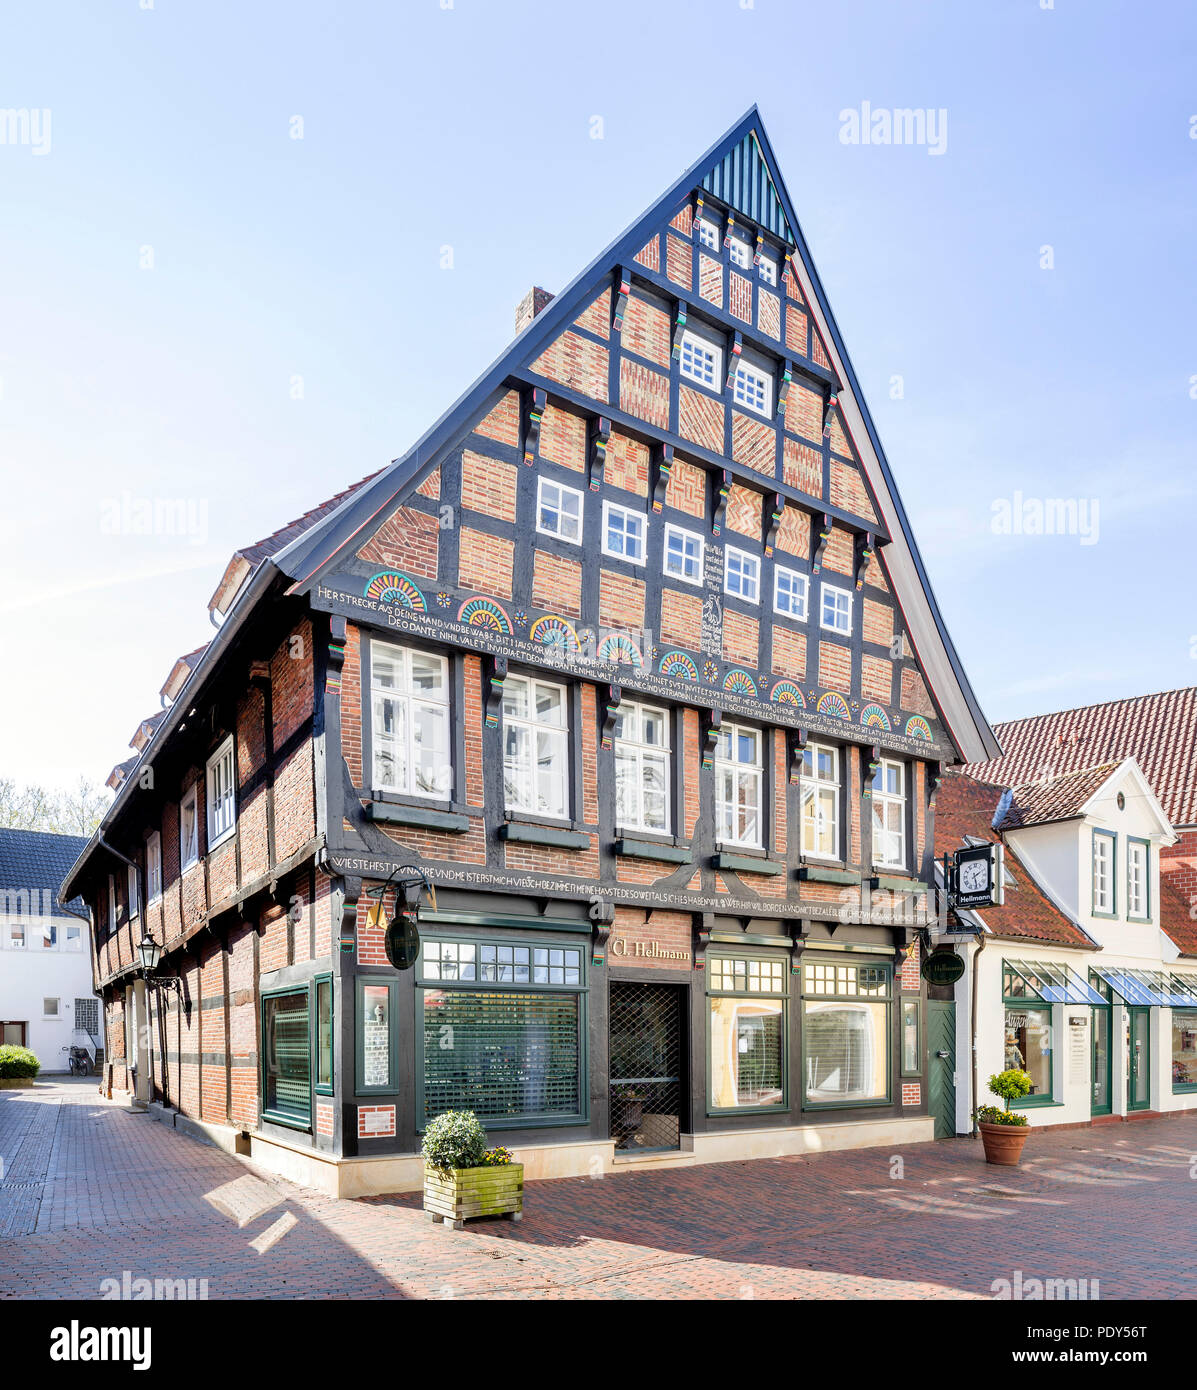 Haus Hellmann, historic half-timbered house, Lingen, Emsland, Lower Saxony, Germany Stock Photo